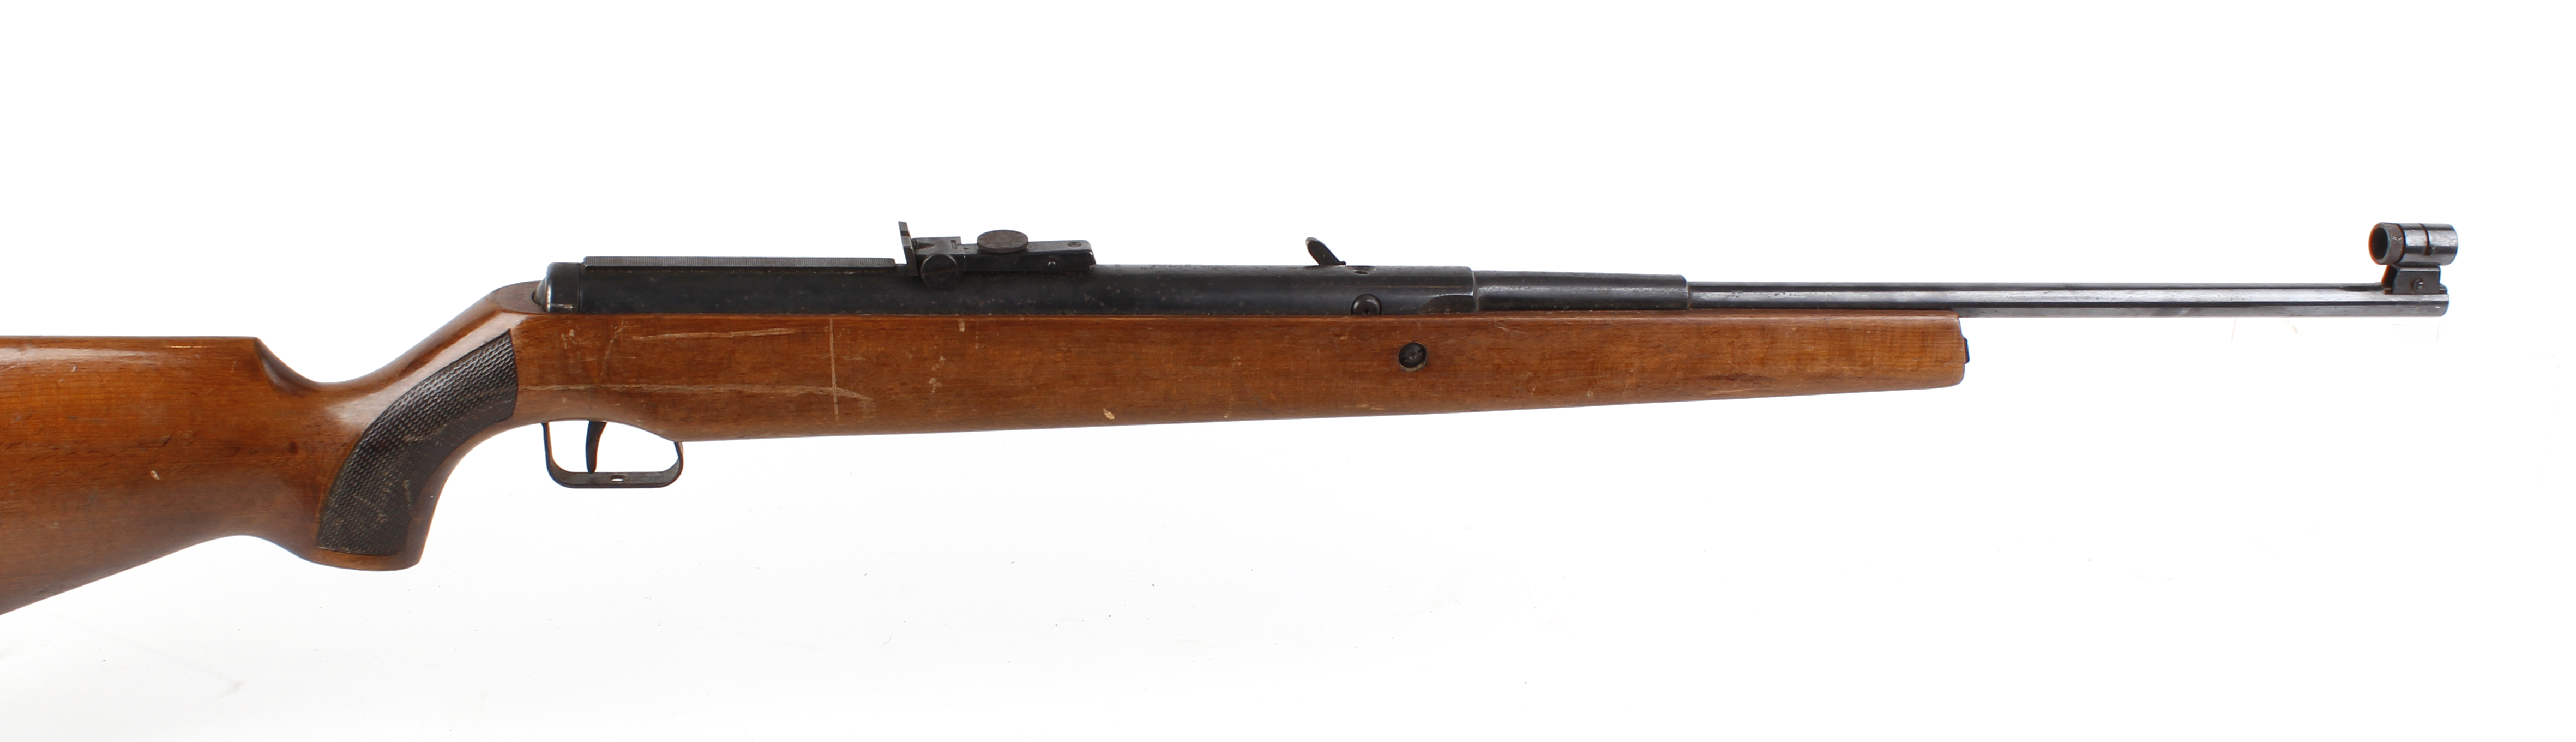 .22 Original Model 50 underlever air rifle, pistol grip stock